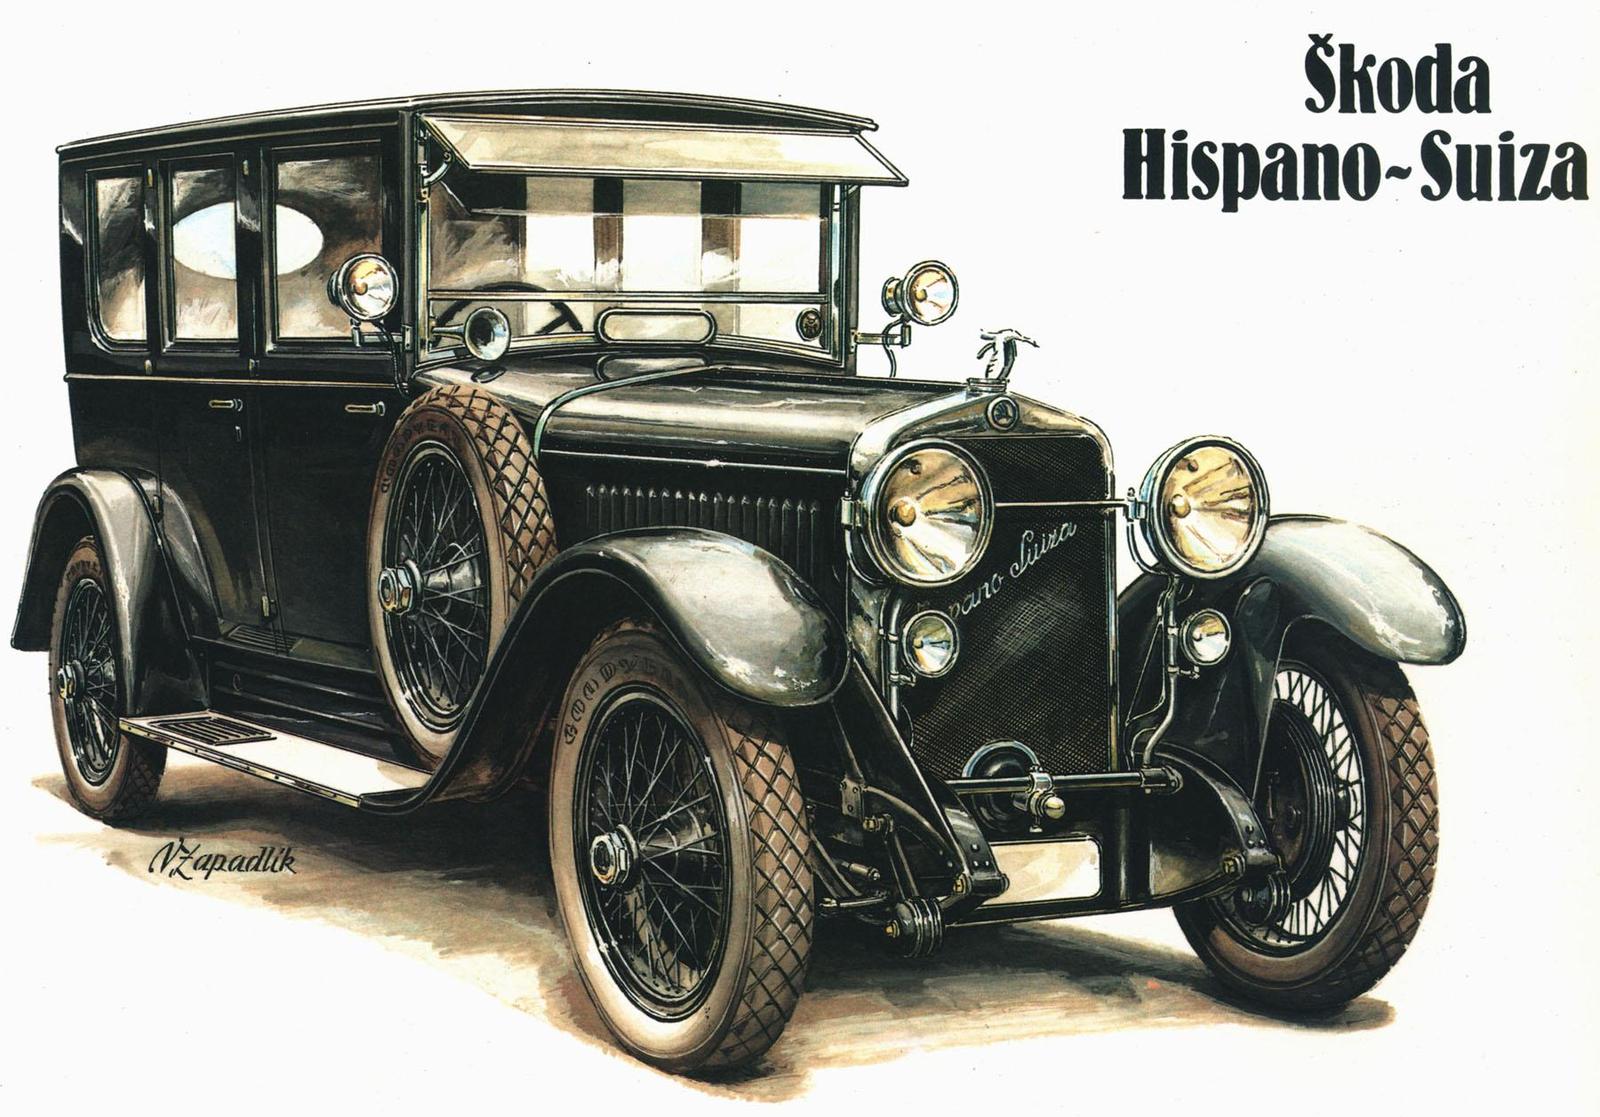 The heyday of the Czechoslovak automobile industry in the 1920s-40s. - Retro car, Czechoslovakia, Story, Longpost